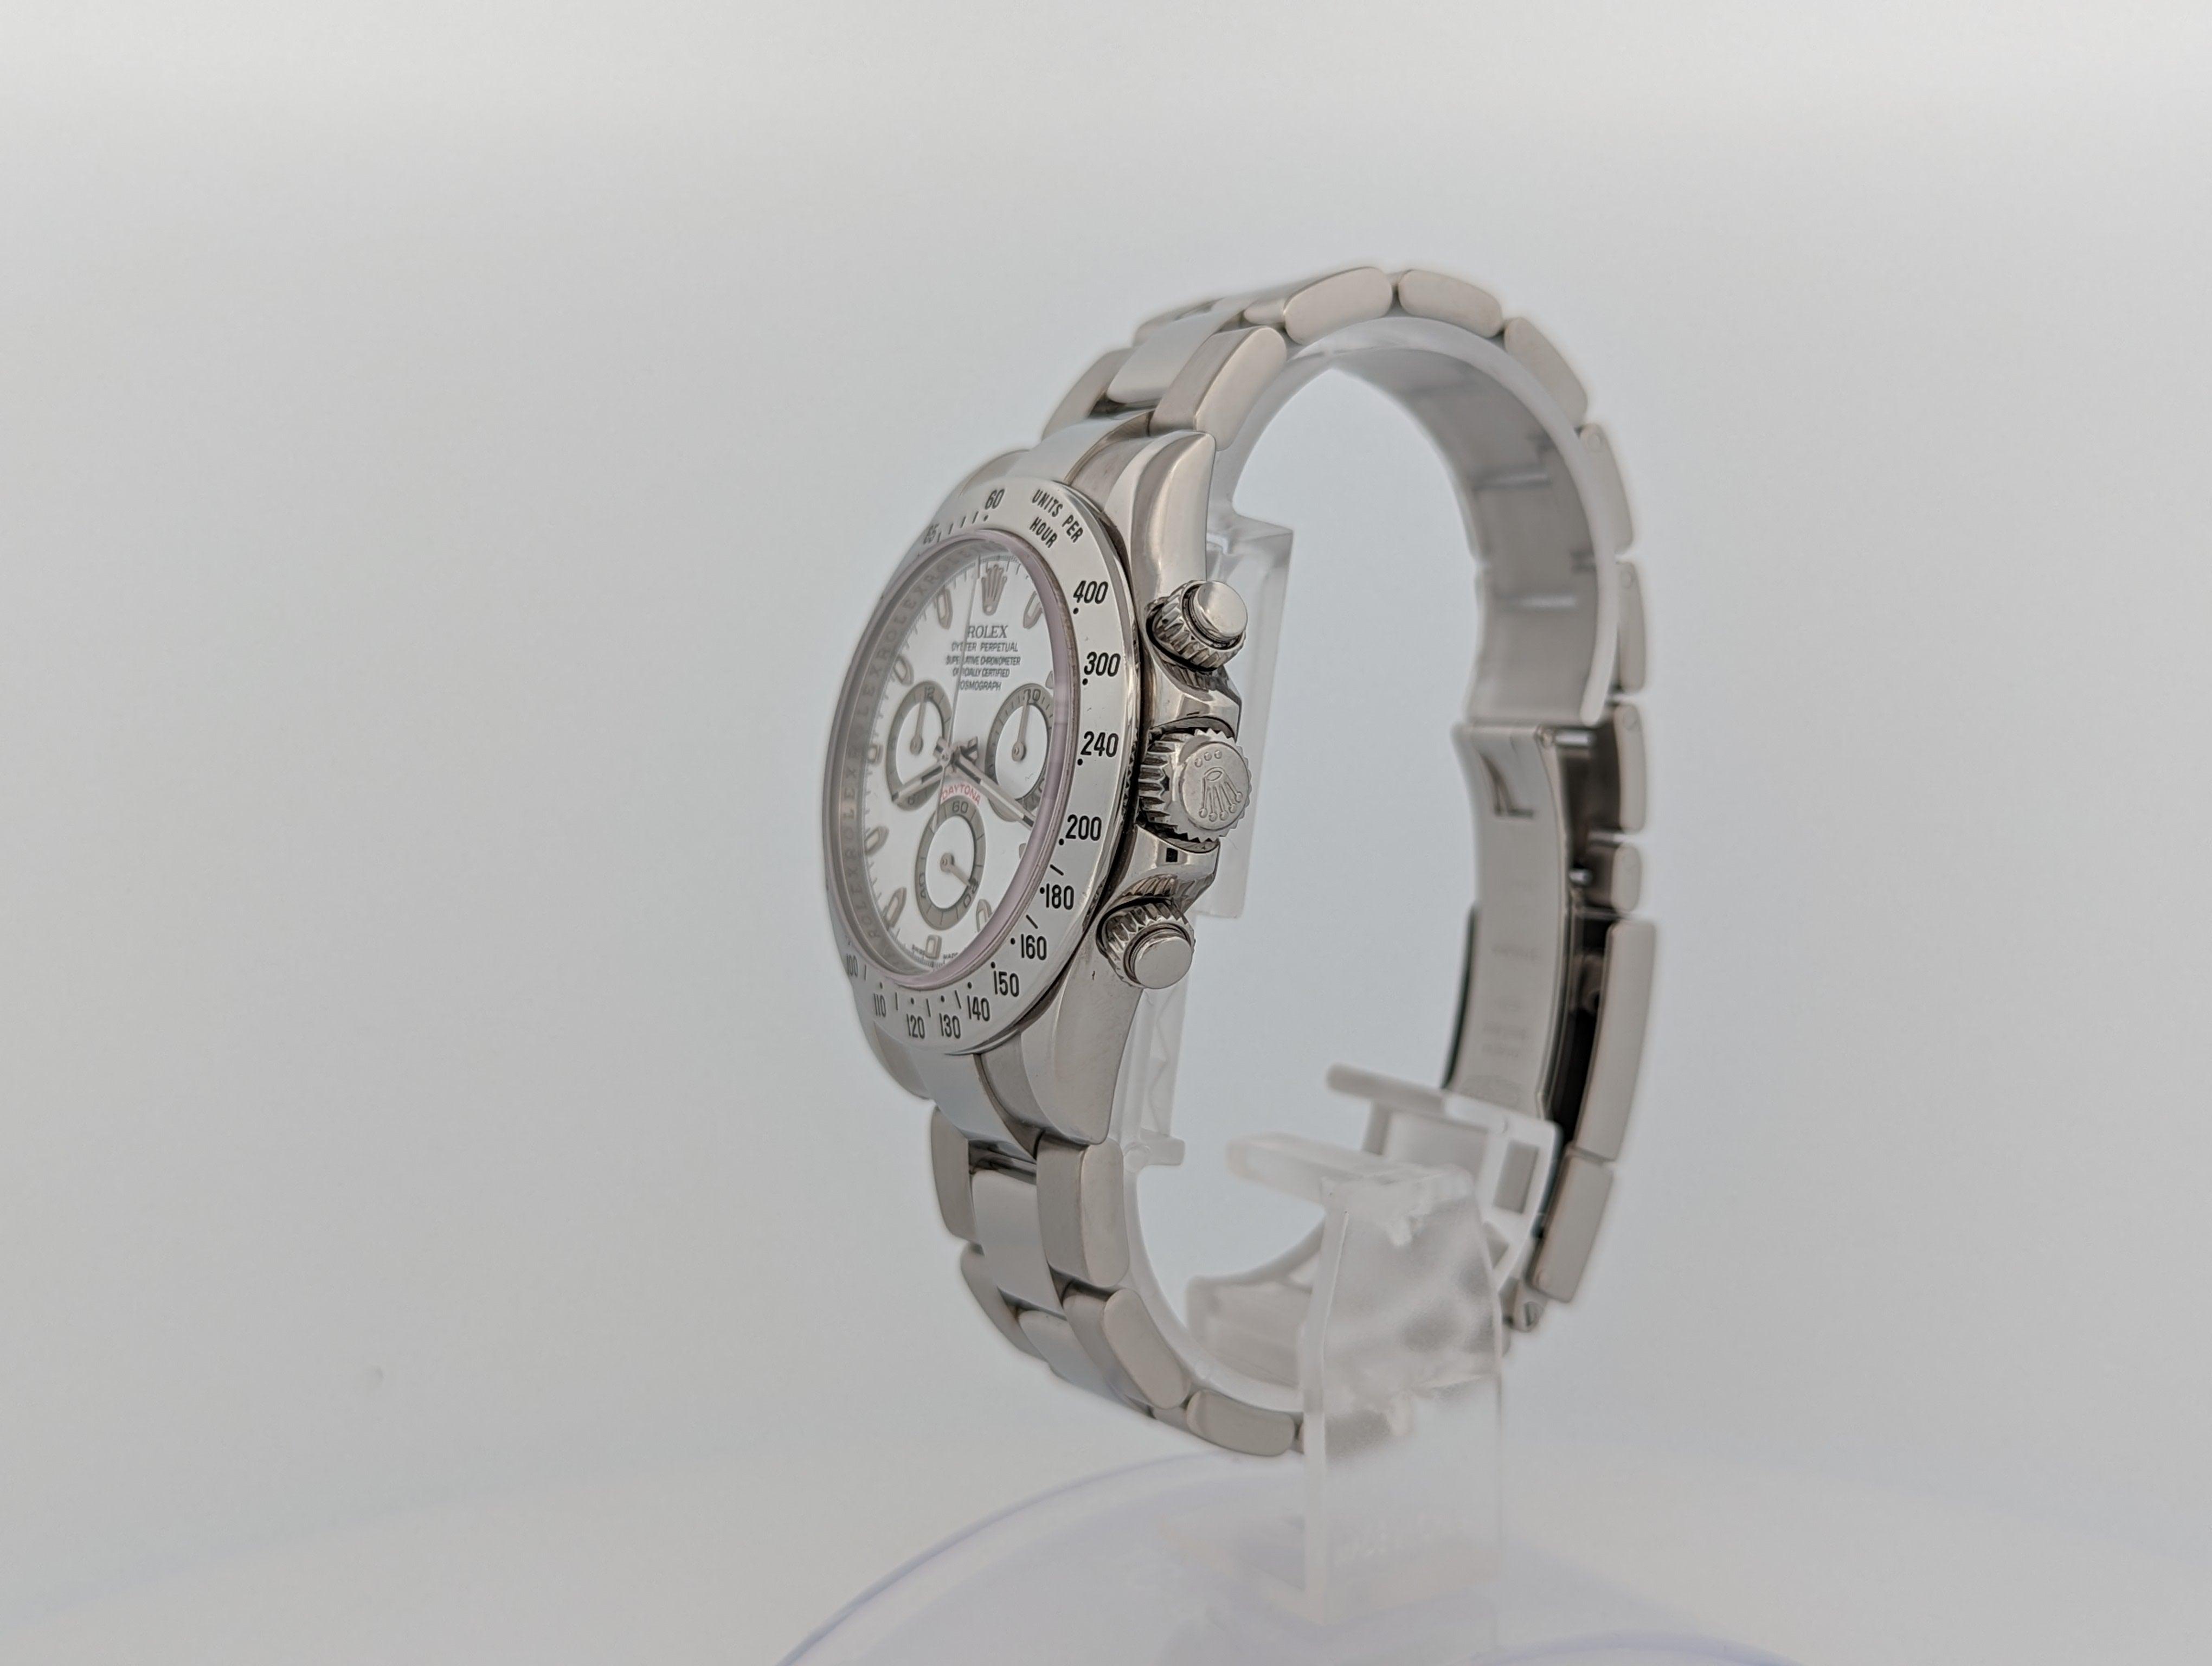 Rolex Daytona 116520 White dial full set - Watch Them Tick